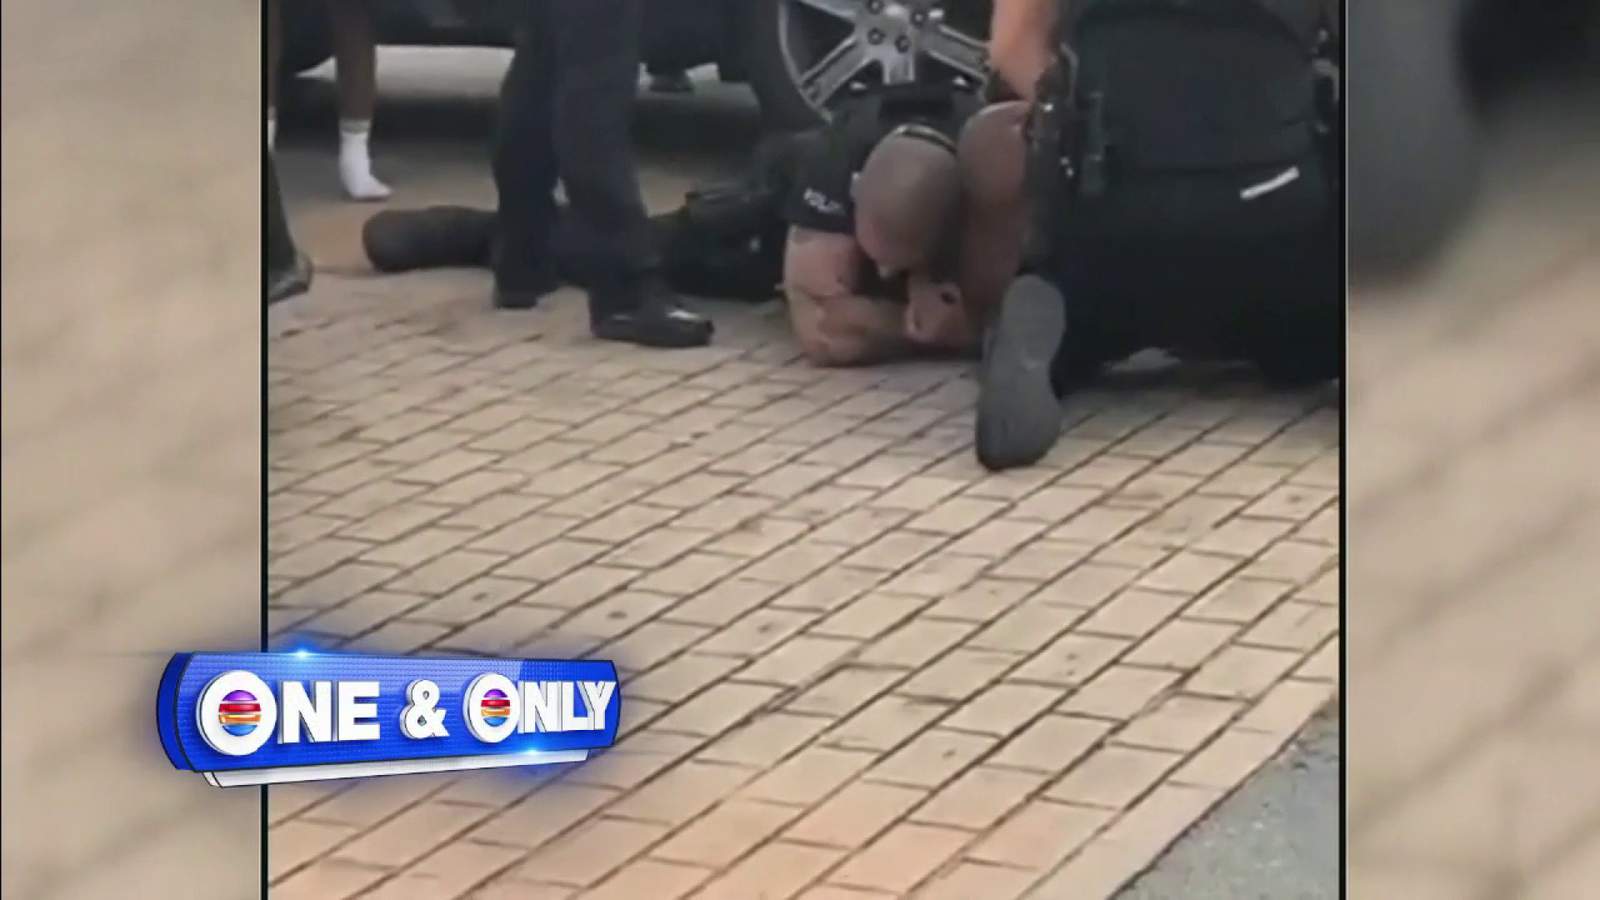 Man in Miami rough arrest video suffered seizure, relatives say